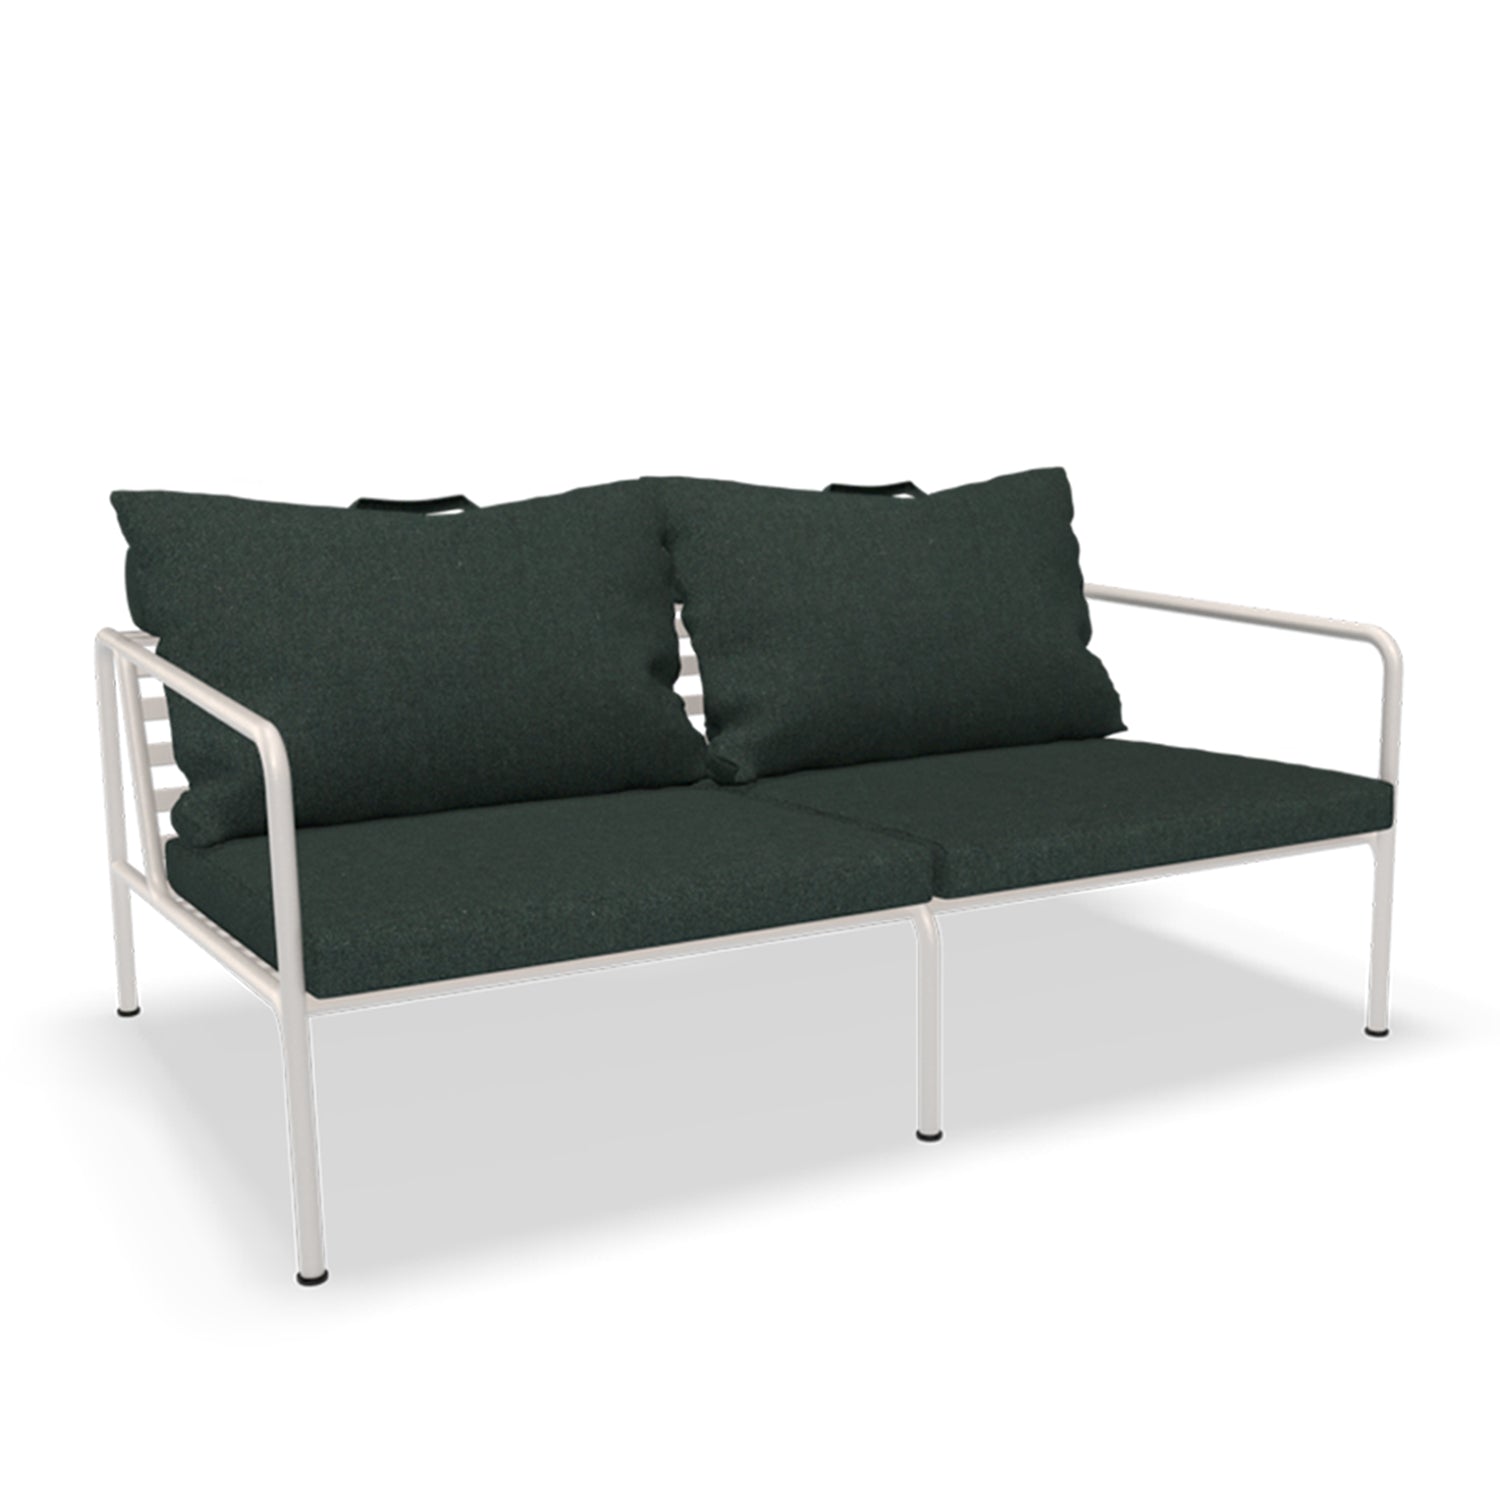 Avon 2 Seater Sofa - The Design Choice